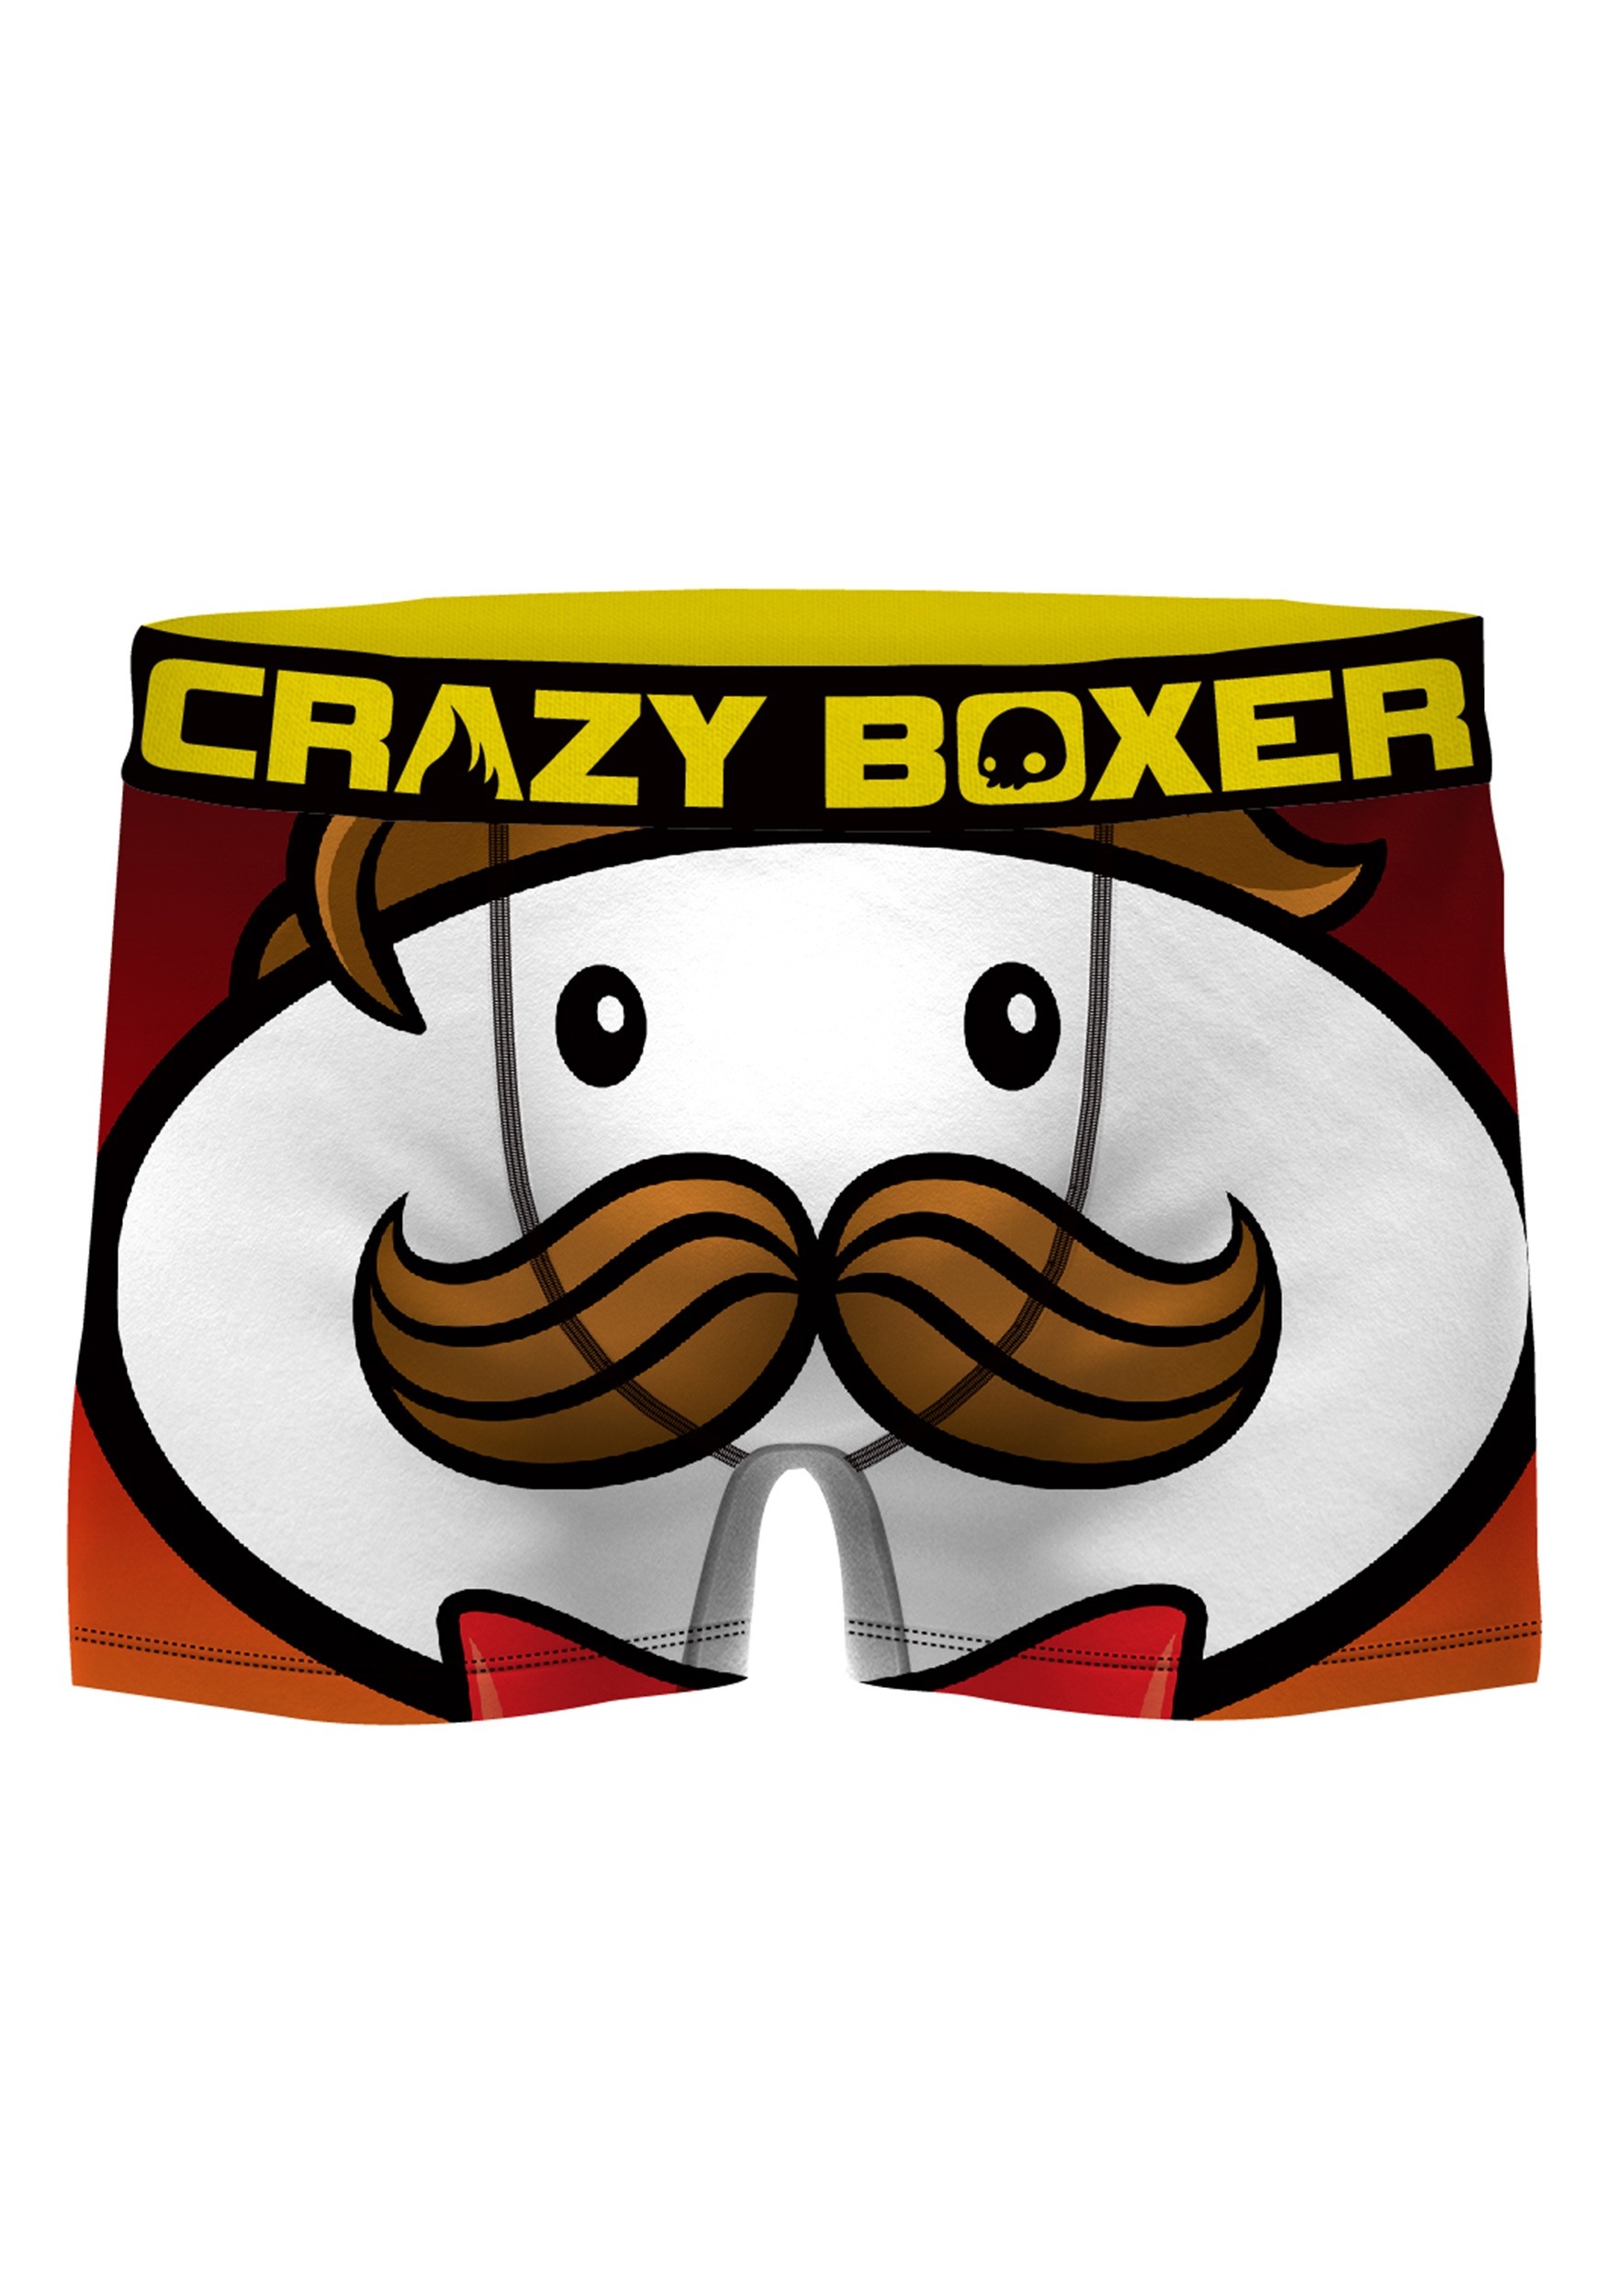 Crazy Boxers Disney Neon Love Boxer Briefs for Men